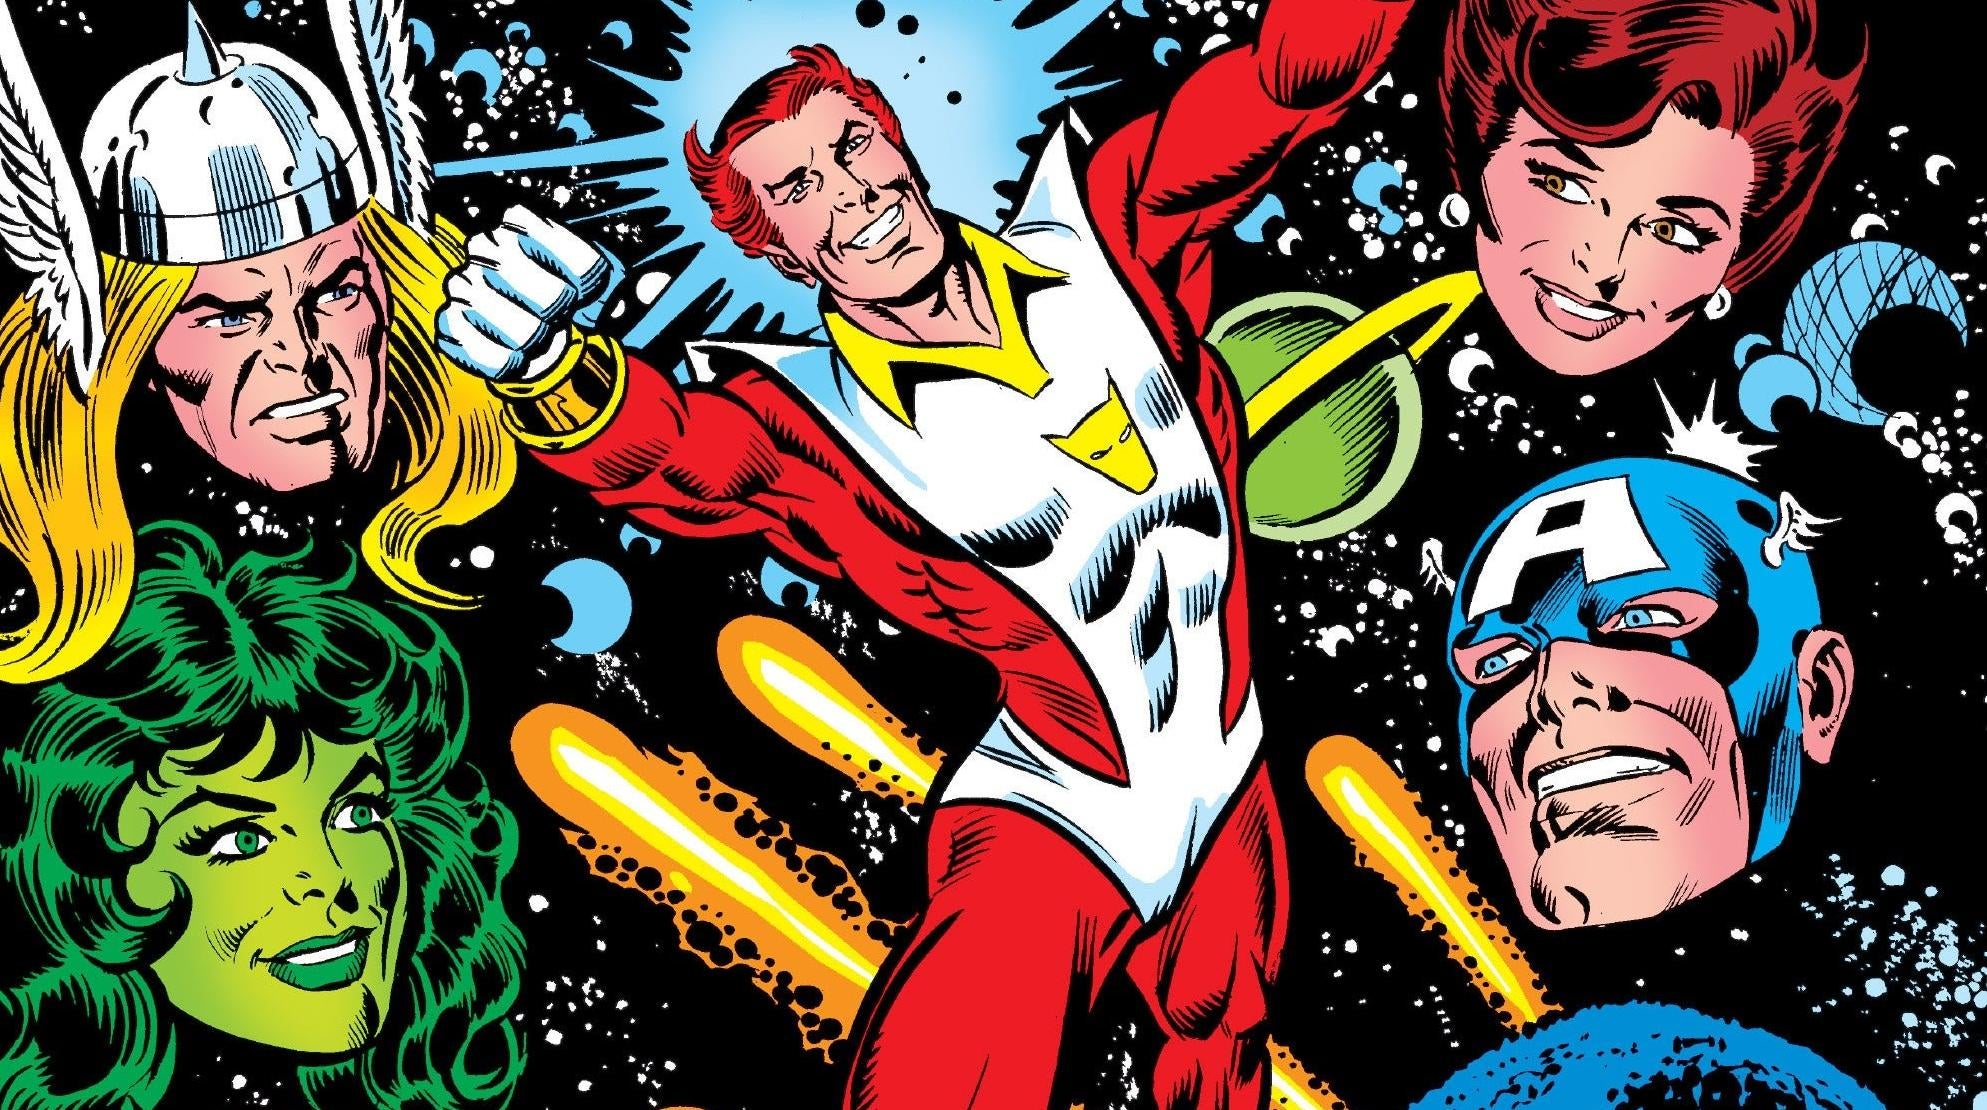 Eros, also known as Starfox, on the cover of Avengers #232. (Image: Al Milgrom, Joe Sinnott, Christie Scheele/Marvel)